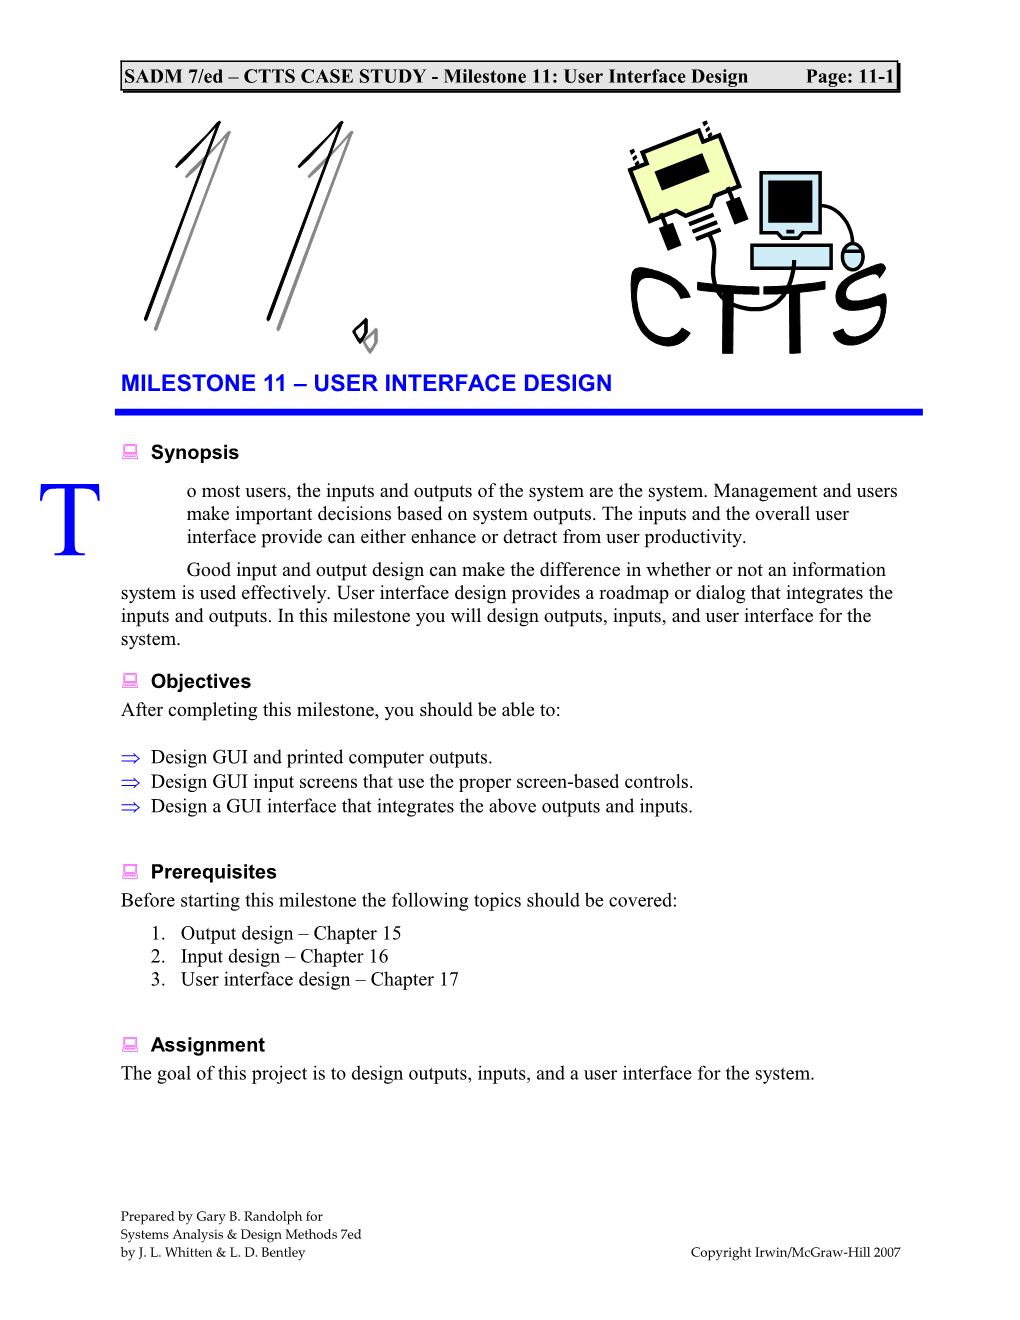 SADM 7/Ed CTTS CASE STUDY - Milestone 11: User Interface Designpage: 11-1